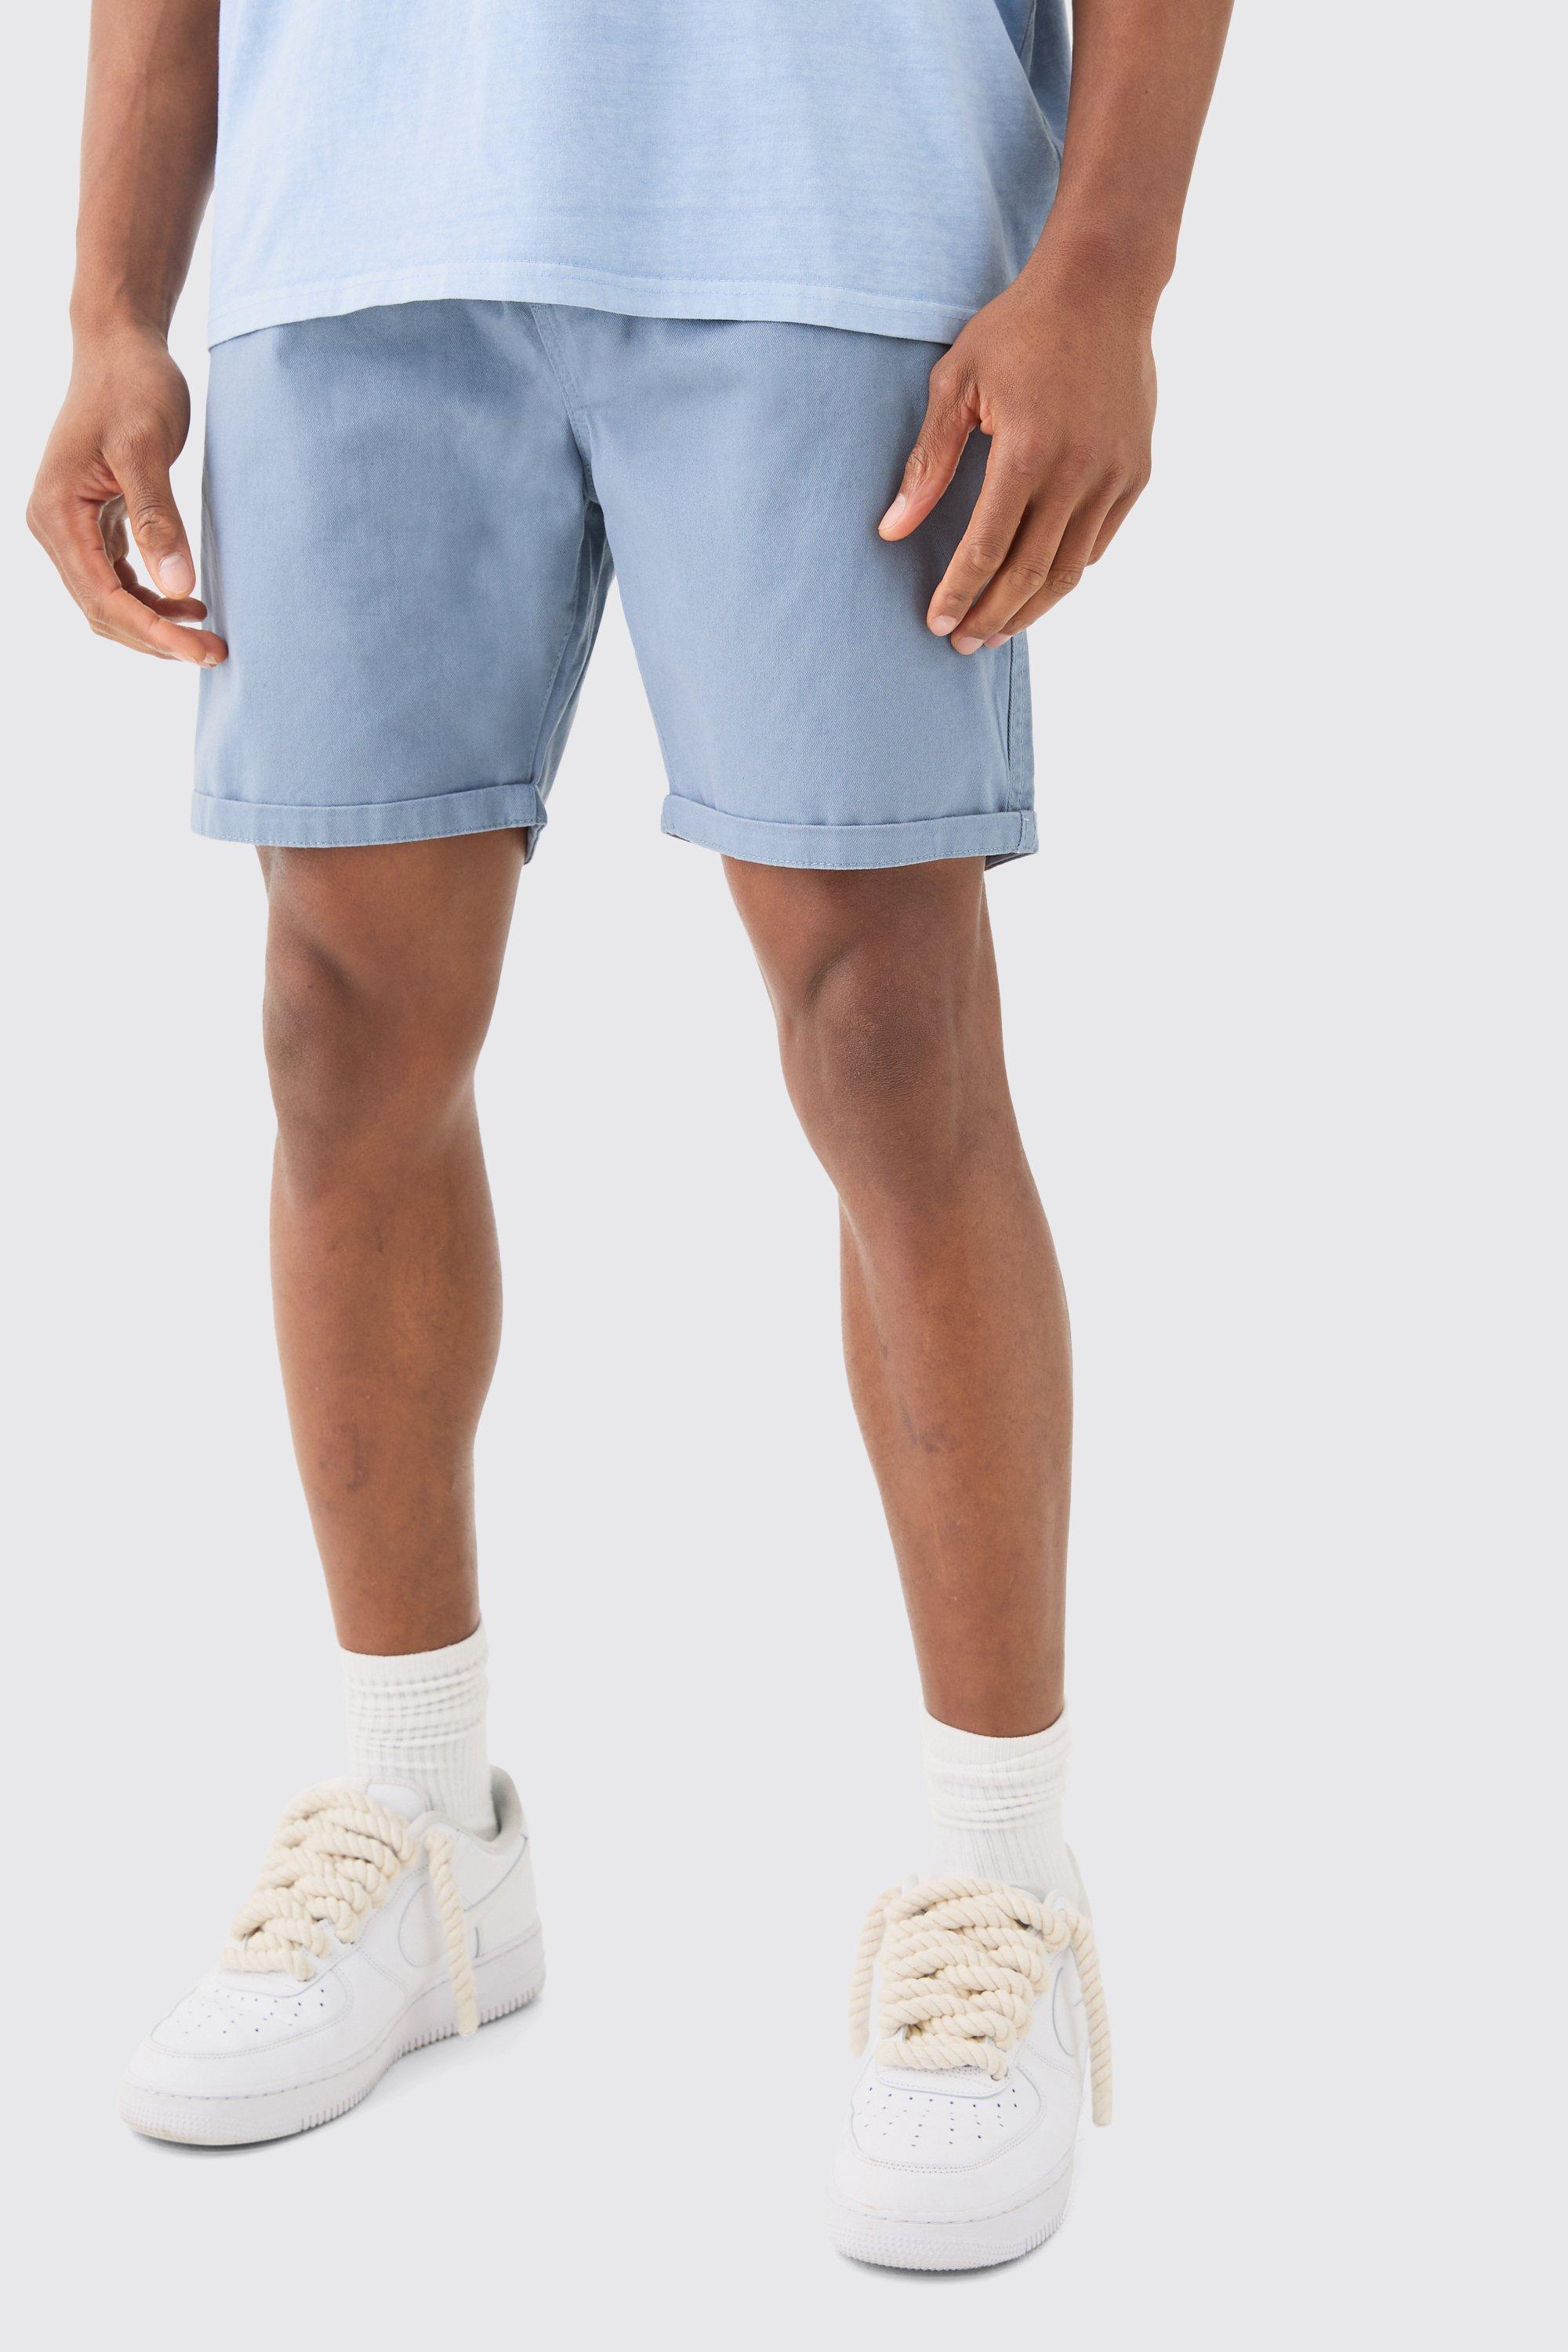 slim fit elastic waist bermuda shorts homme - bleu - s, bleu